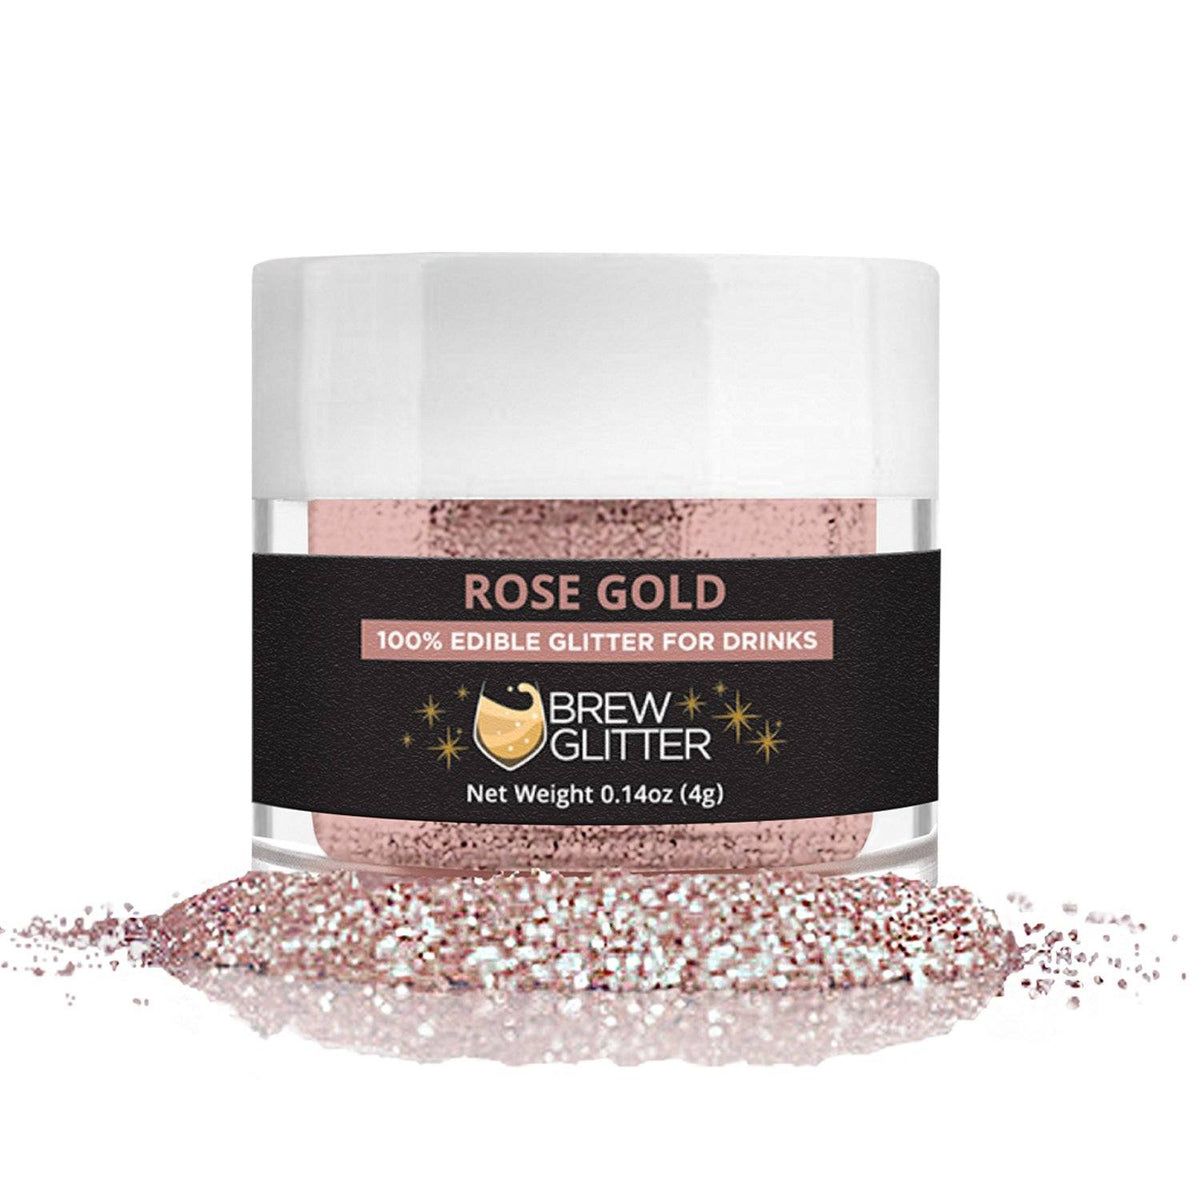 Rose Gold Edible Glitter 4g